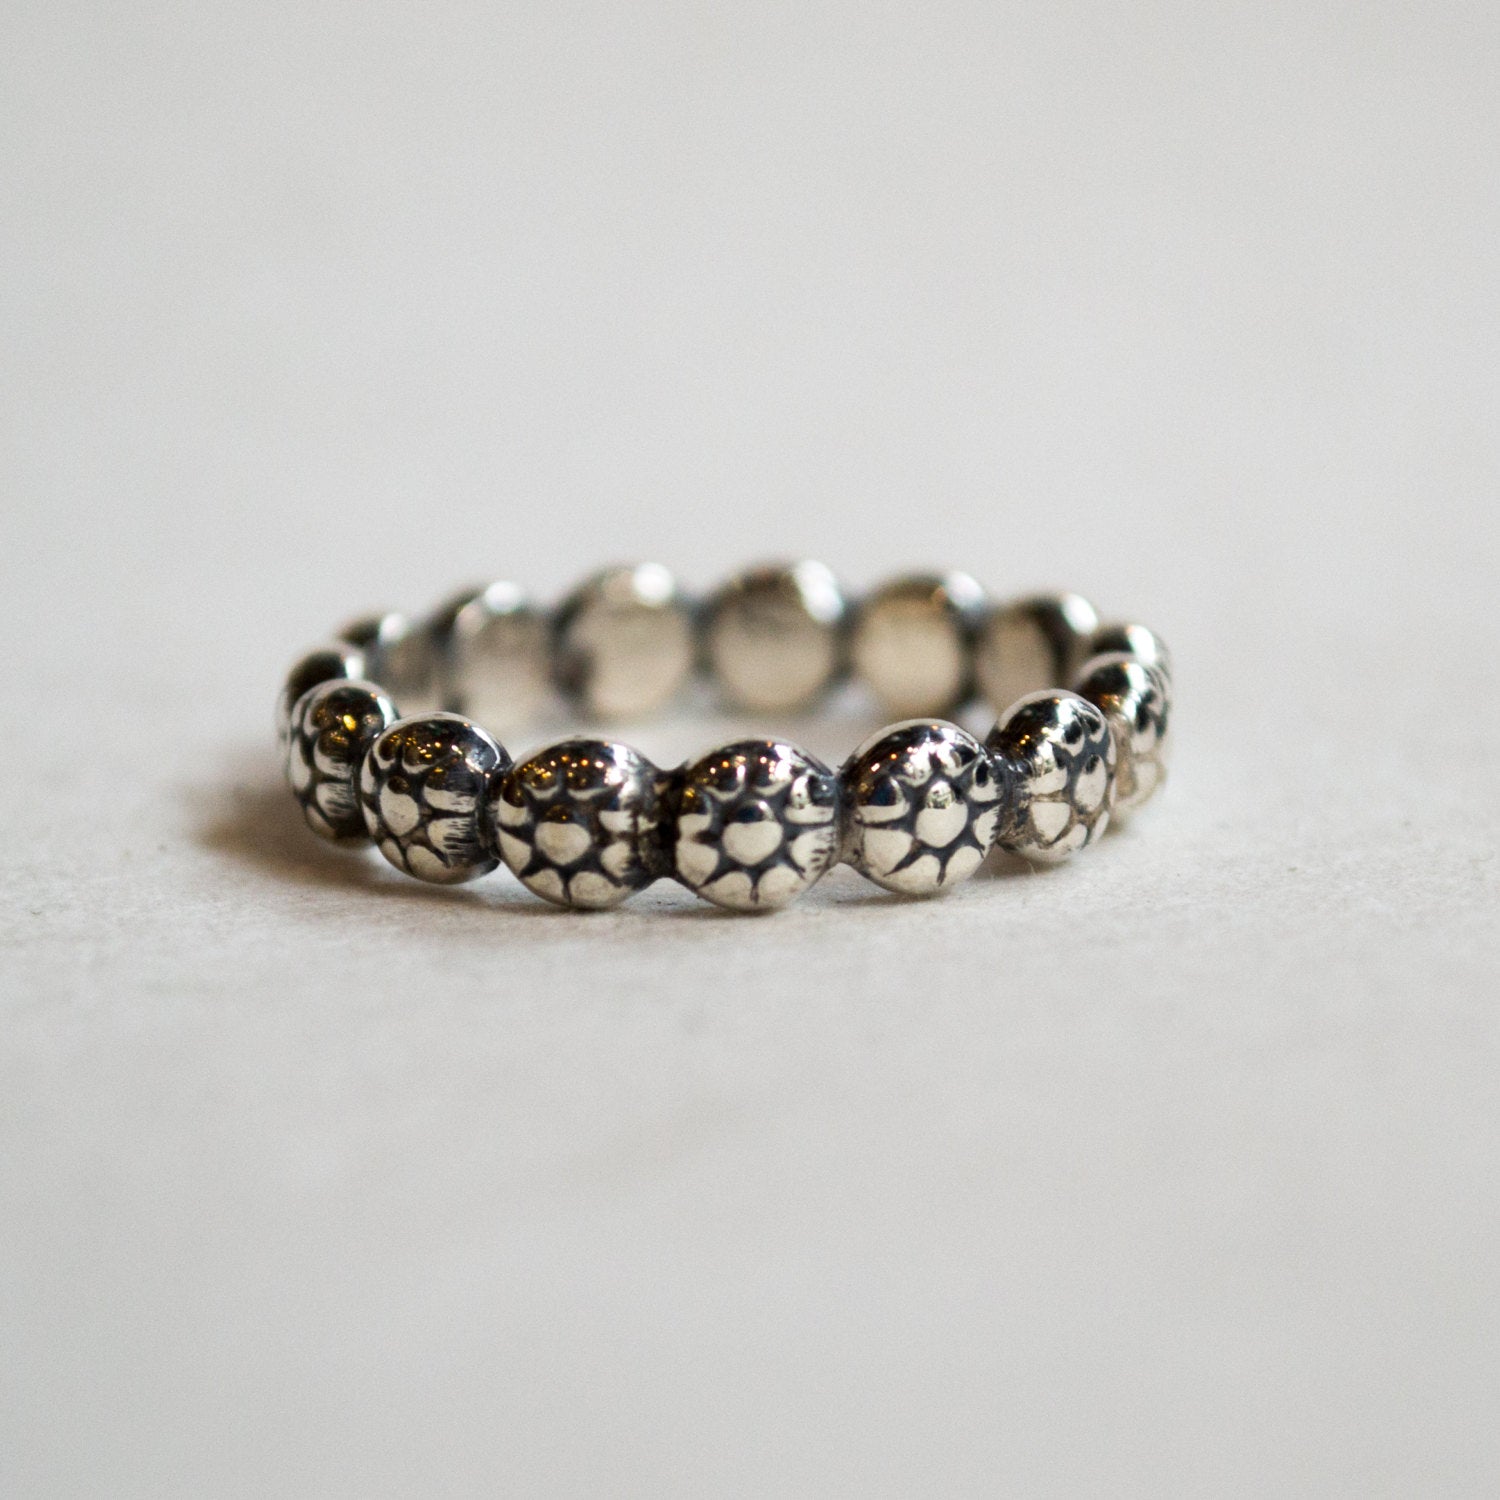 Simple wedding band, stars ring, thin silver band, stacking ring, small stars ring, simple band, dainty ring, midi ring - Oasis R2287